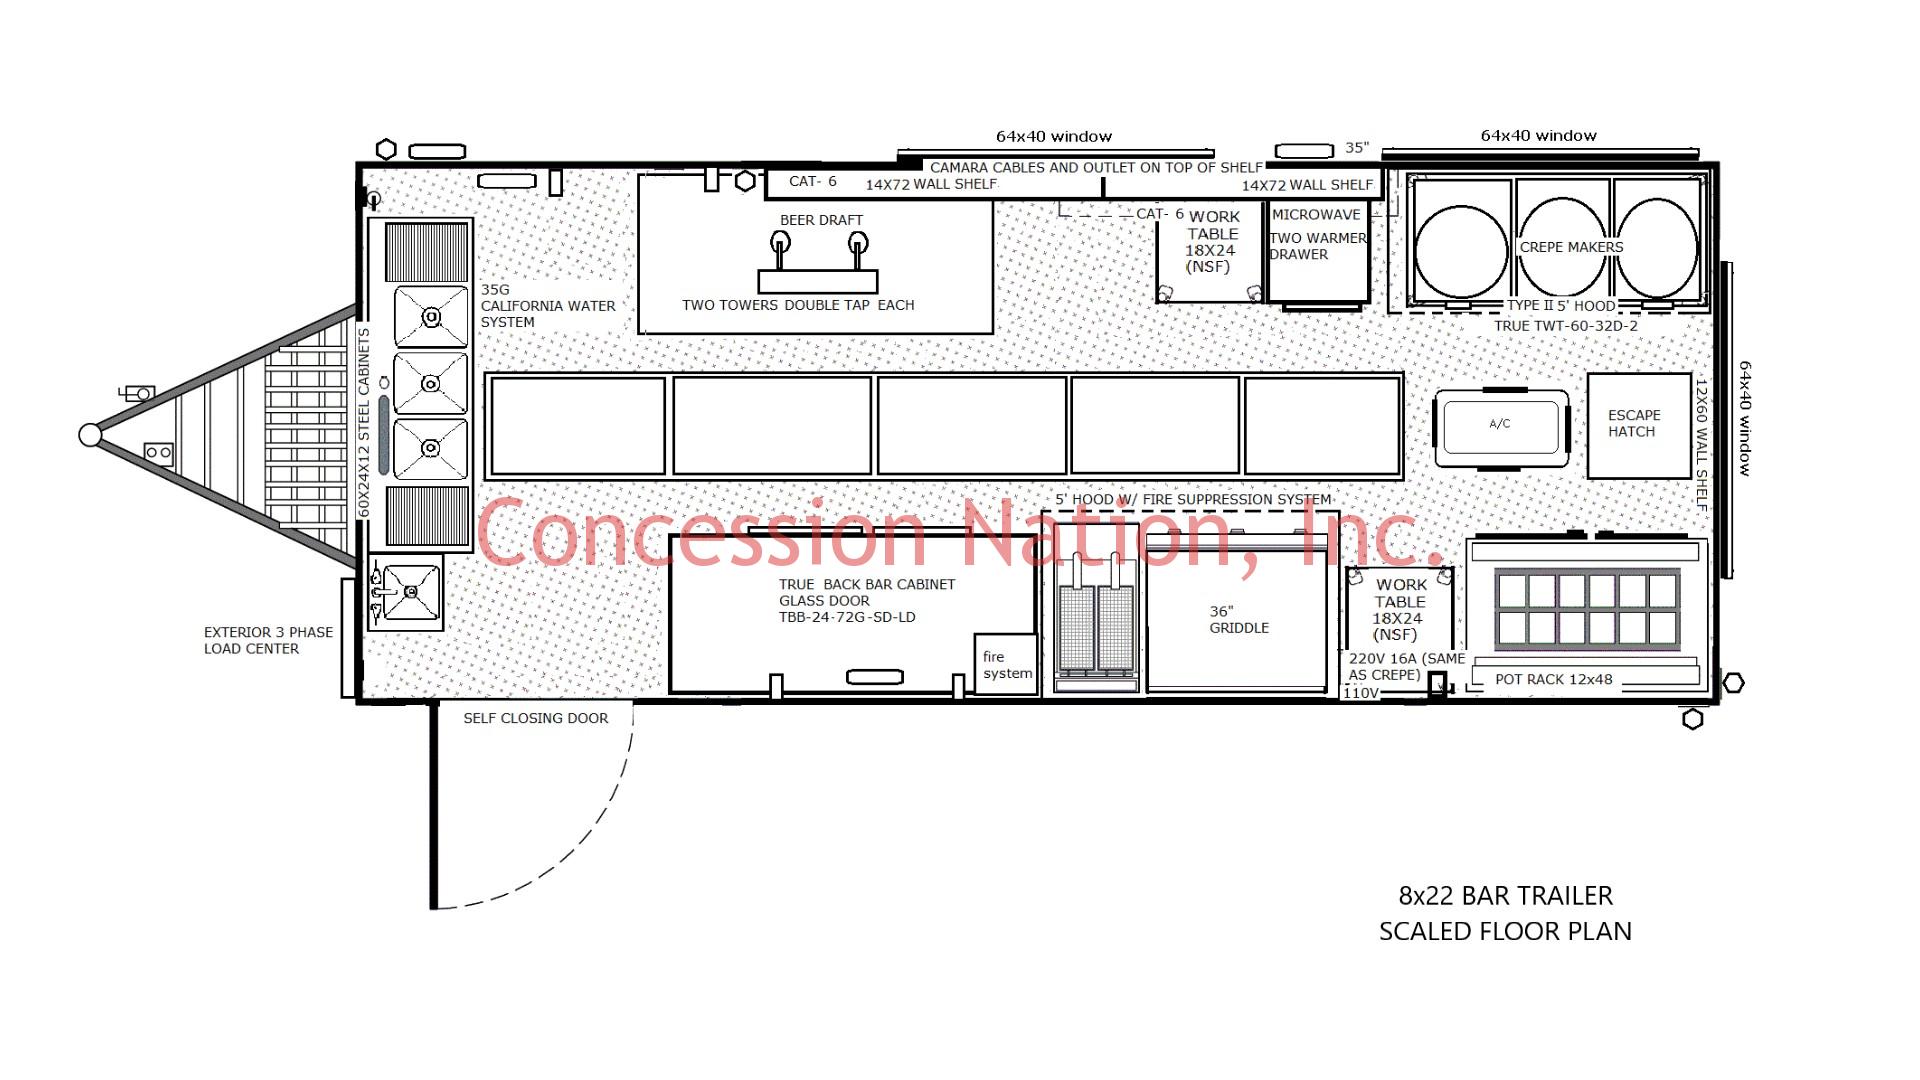 Chasseray 8x22 bar trailer floor plan